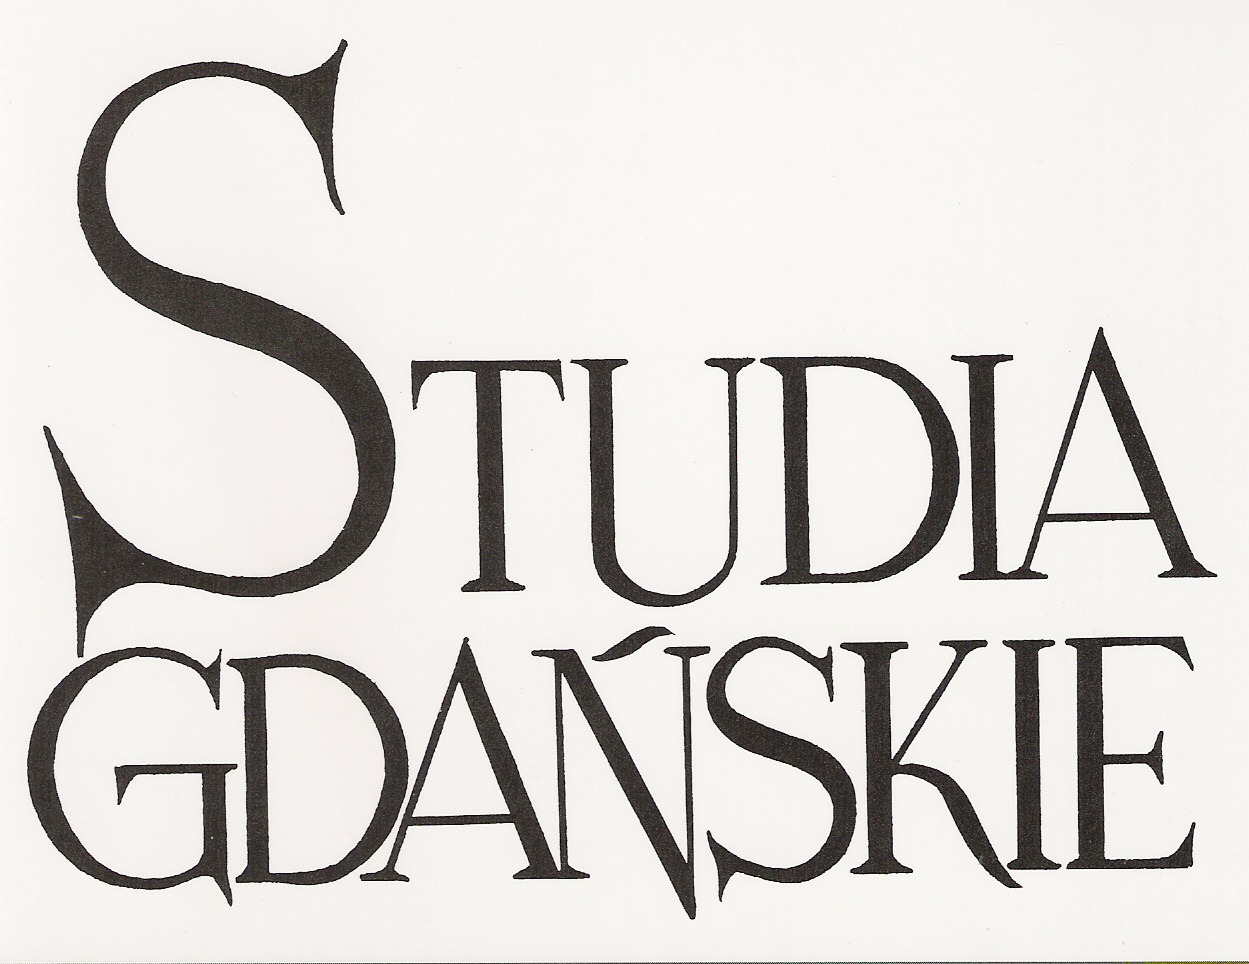 Gdansk Studies